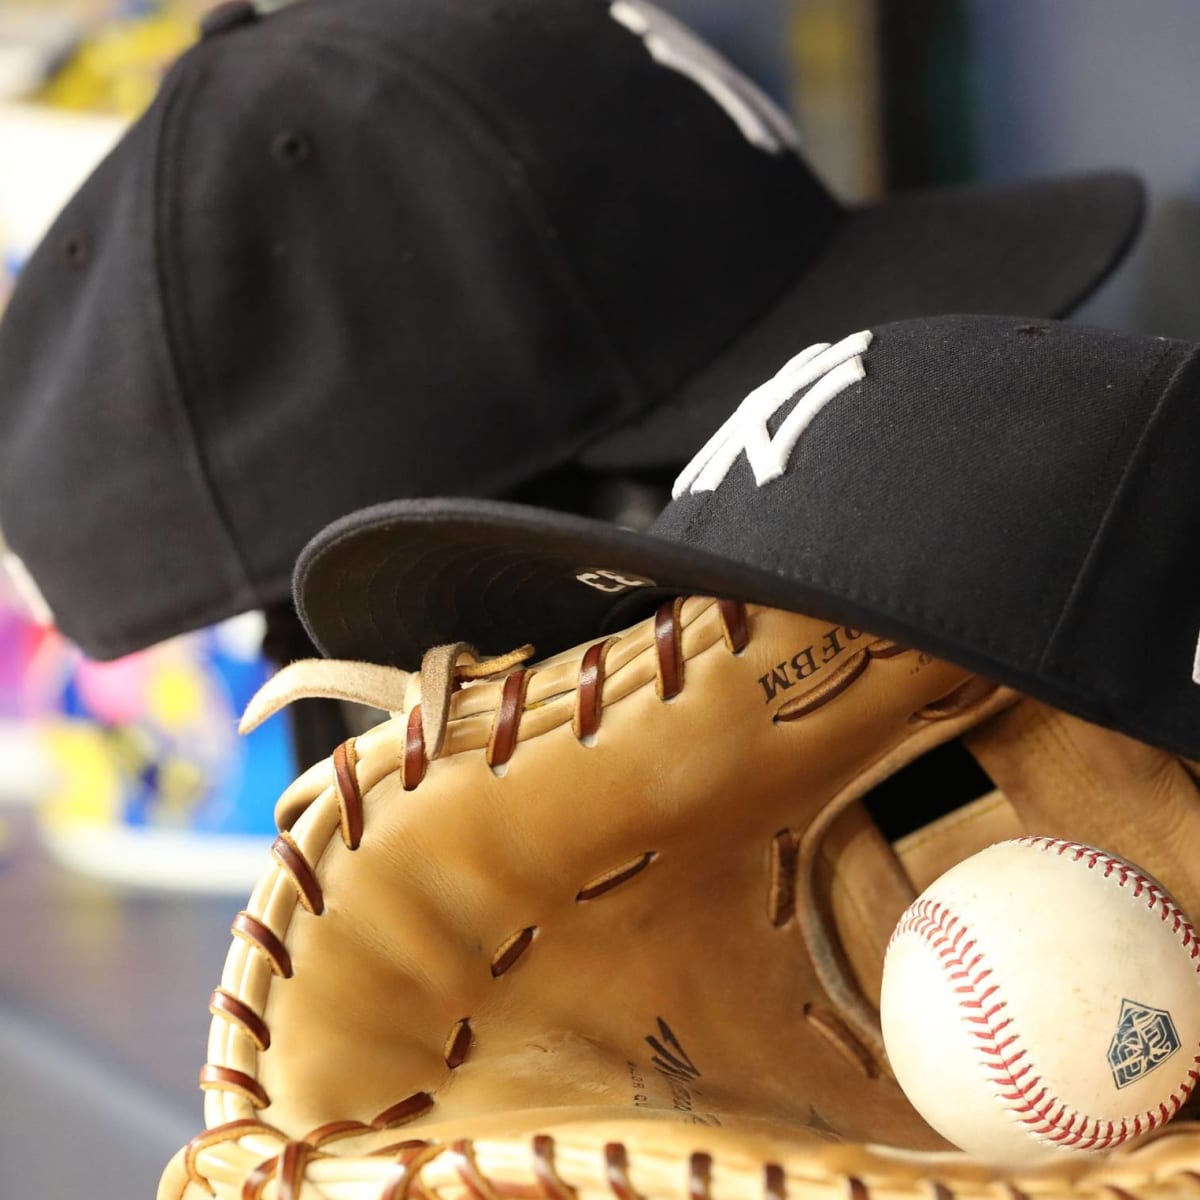 Yankees hiring former 3-time All-Star as next hitting coach